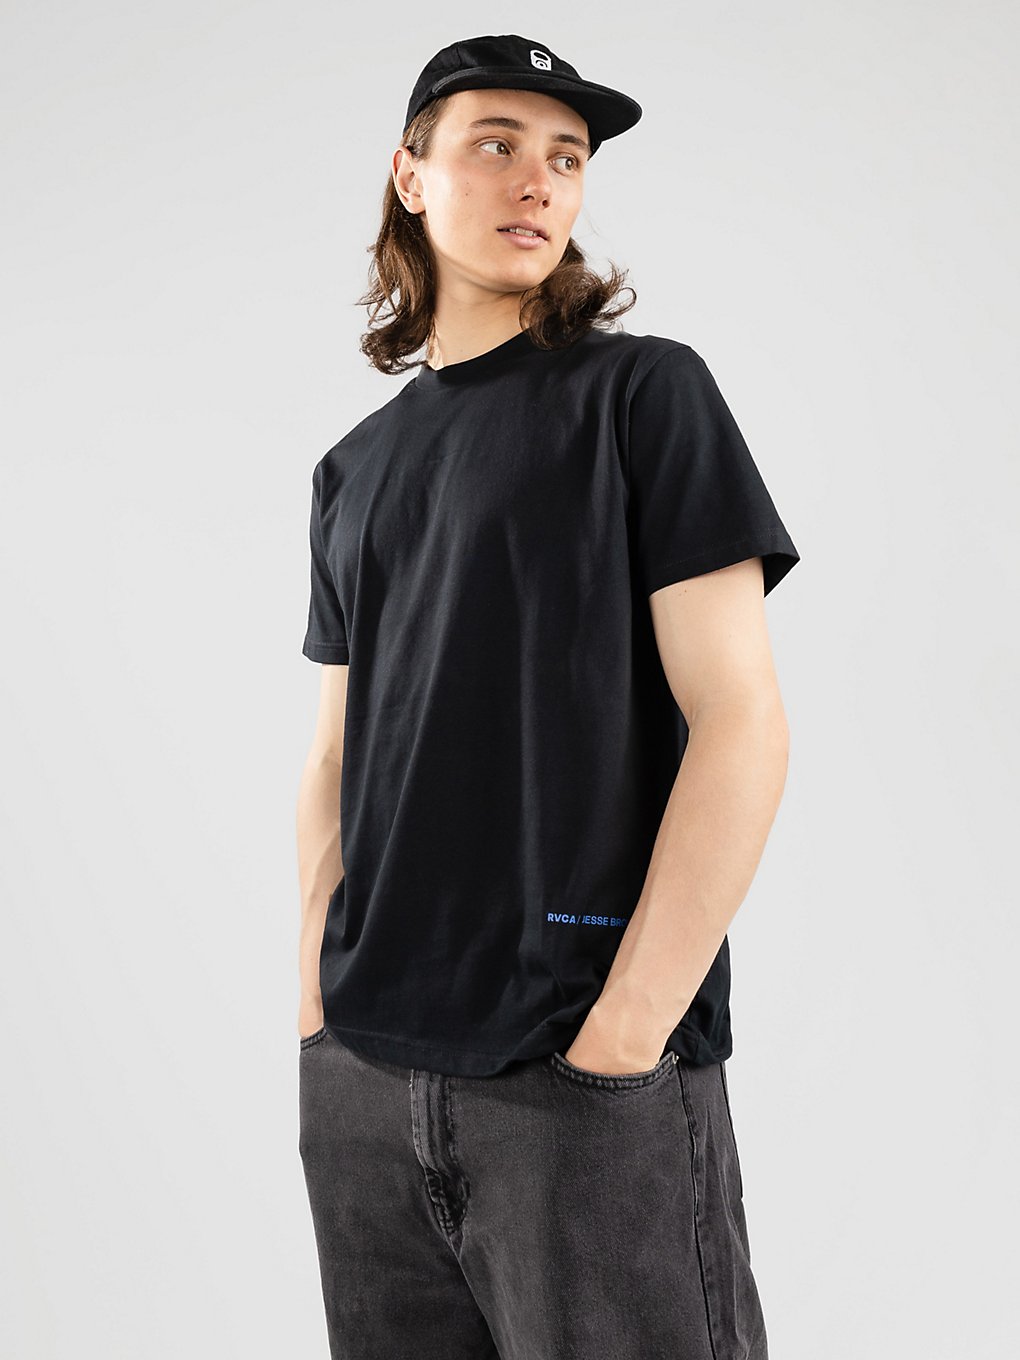 RVCA Jesse Brown Shapes T-Shirt black kaufen